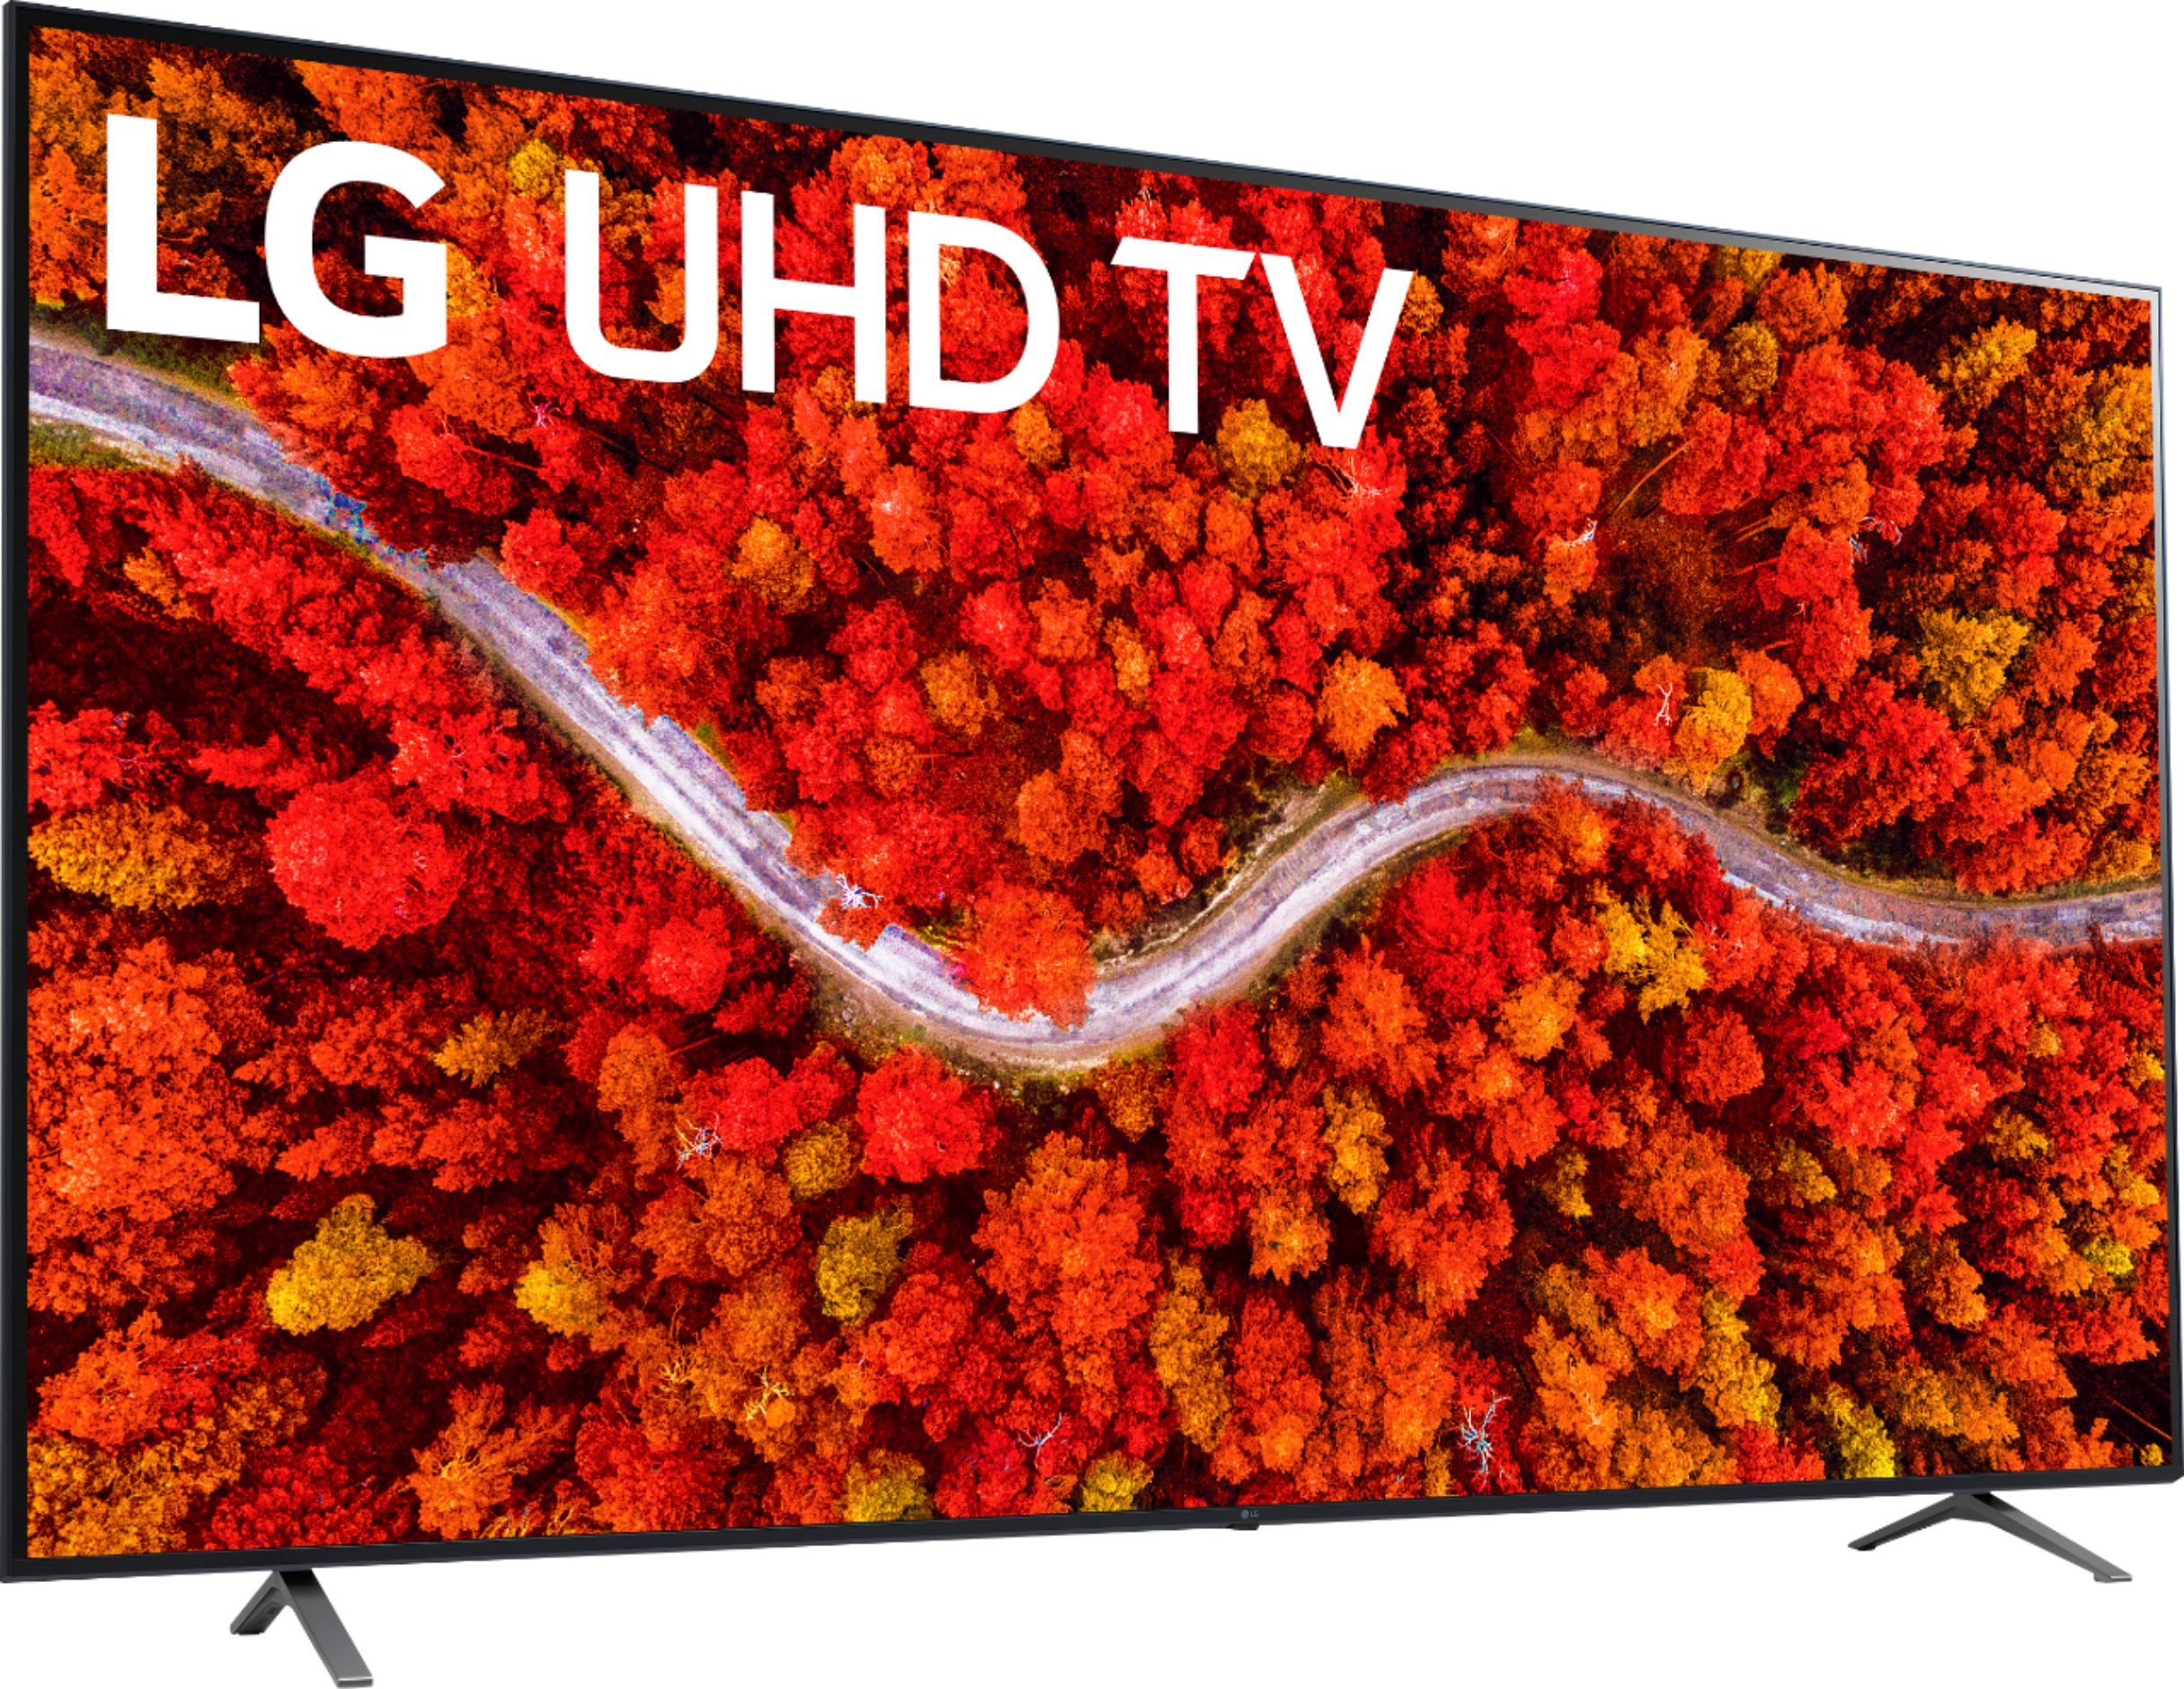 LG 70" UP8070 Series (2021) 4K UHD Smart TV @ Best Buy $649.99